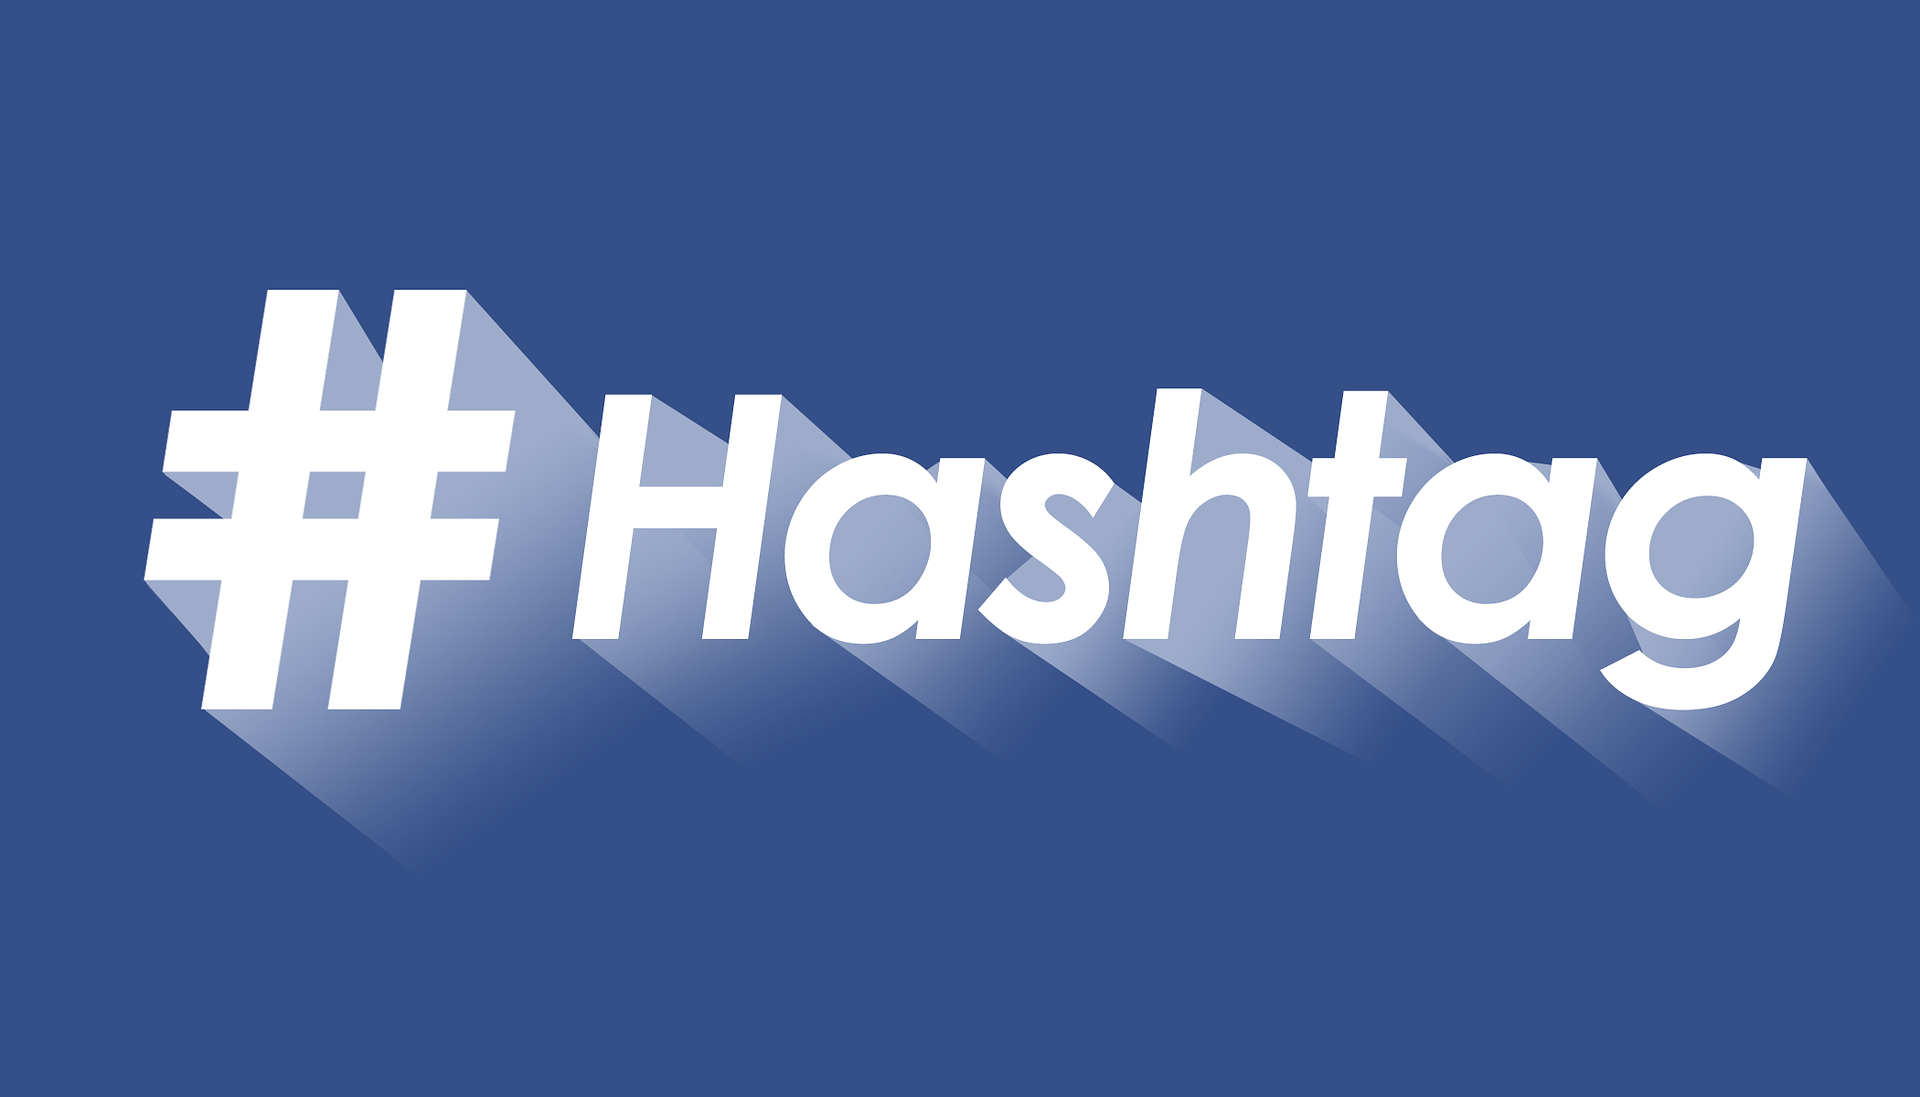 Hashtag campaign